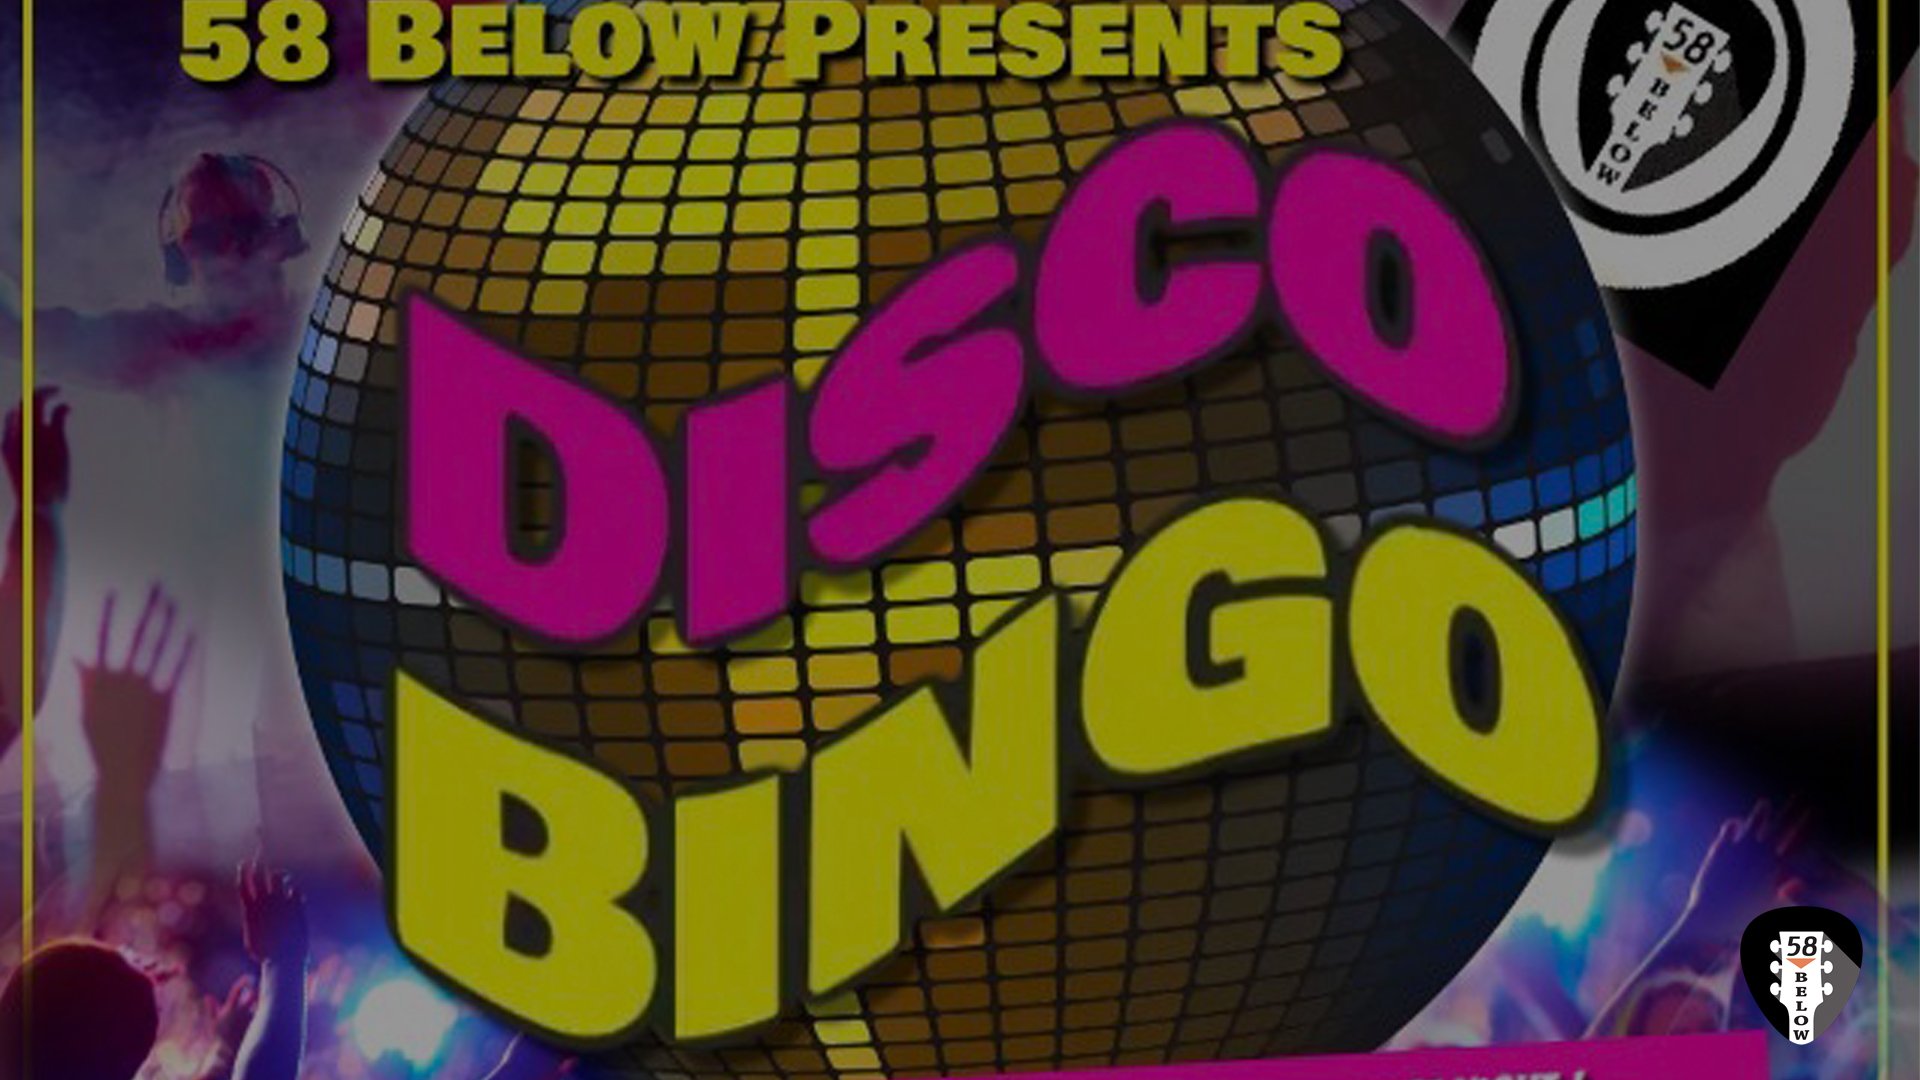 Disco Bingo at 58 Below